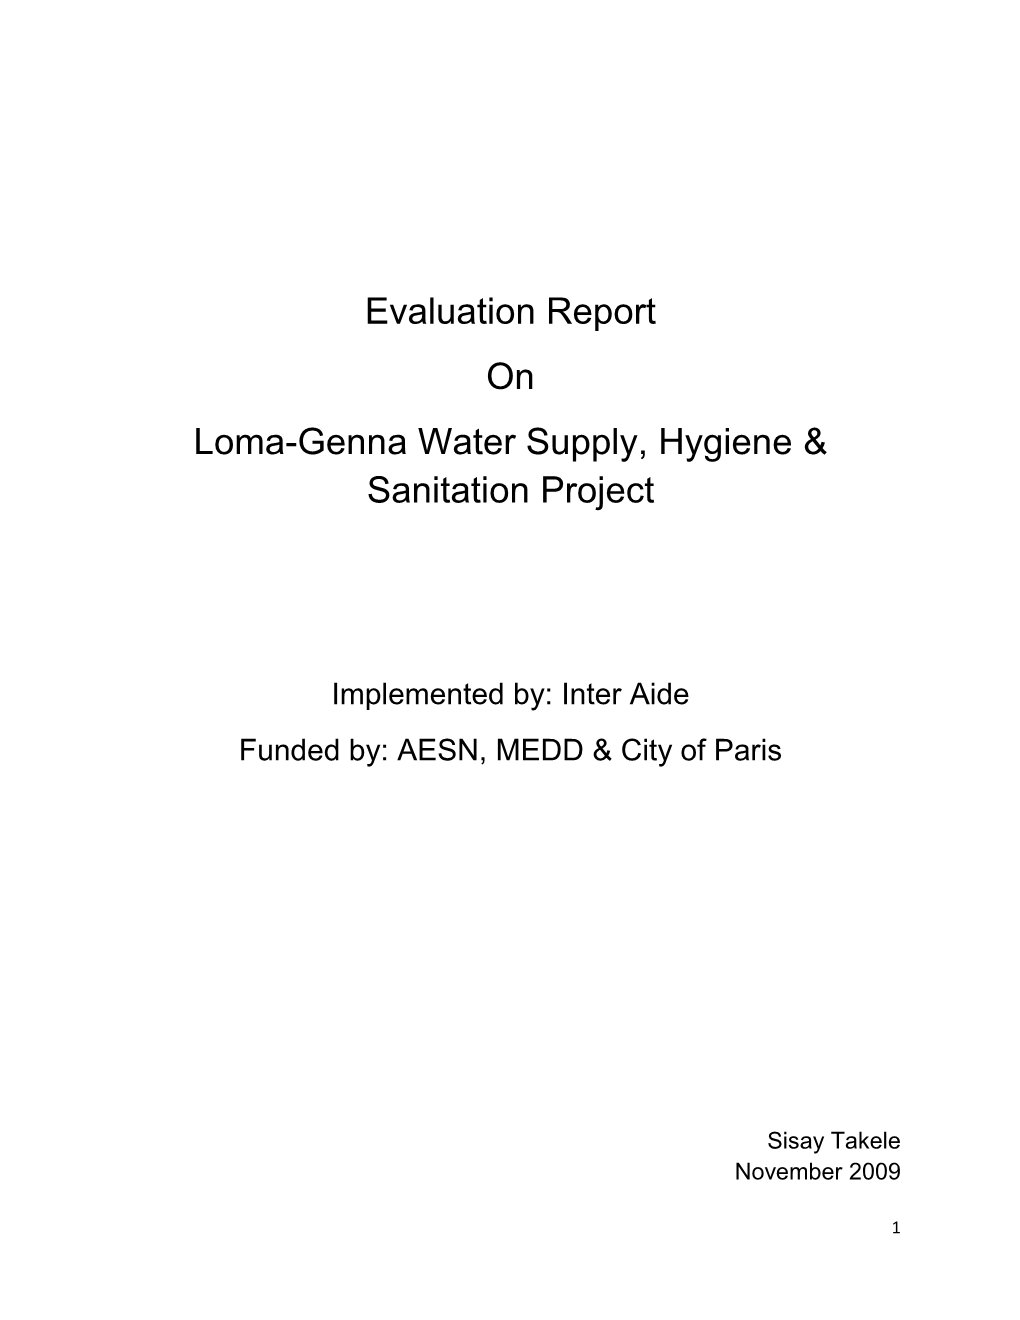 Evaluation Report on Loma-Genna Water Supply, Hygiene & Sanitation